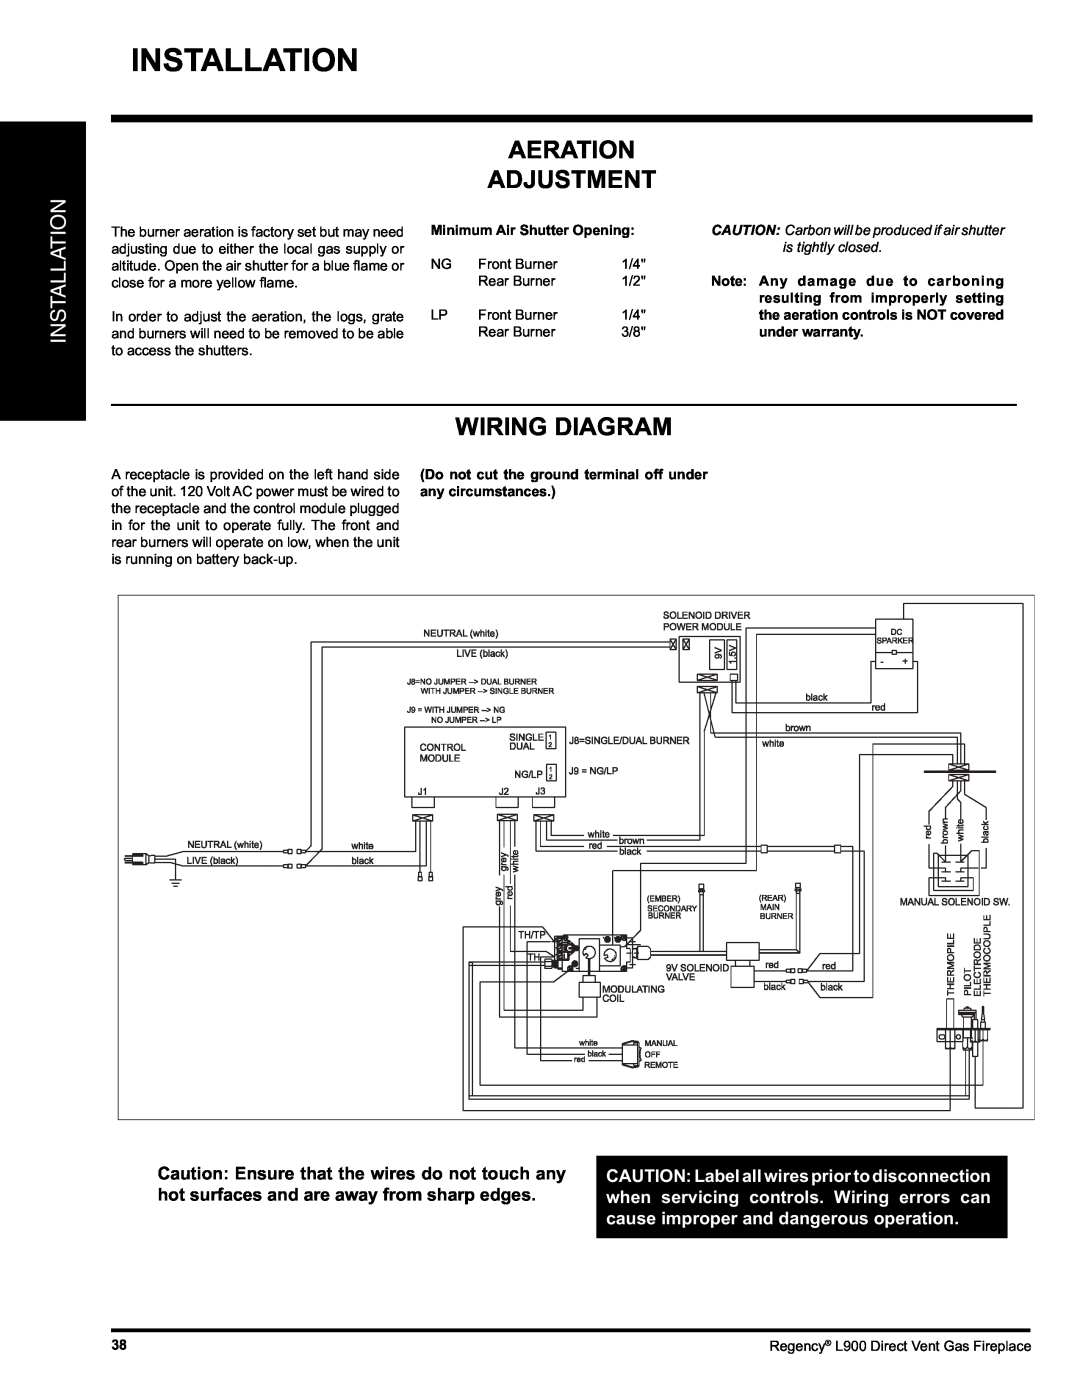 Regency L900-LP, L900-NG installation manual Installation, Aeration Adjustment, Wiring Diagram, is tightly closed 